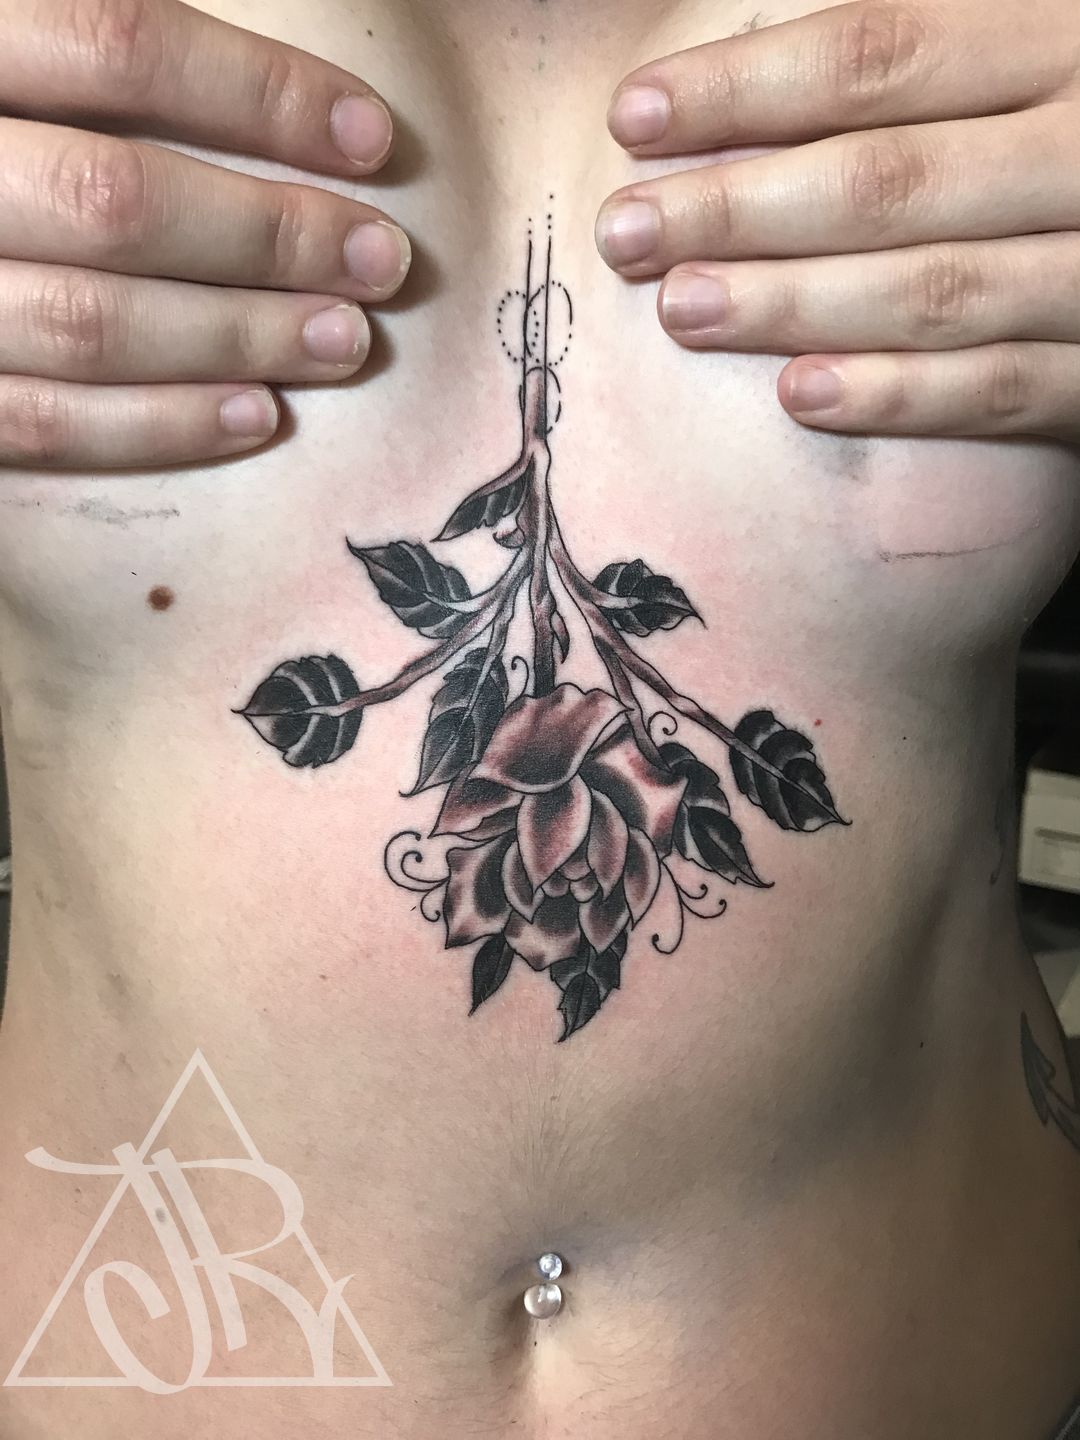 Tiny rose sternum tattoo by FacundoPereyra on DeviantArt